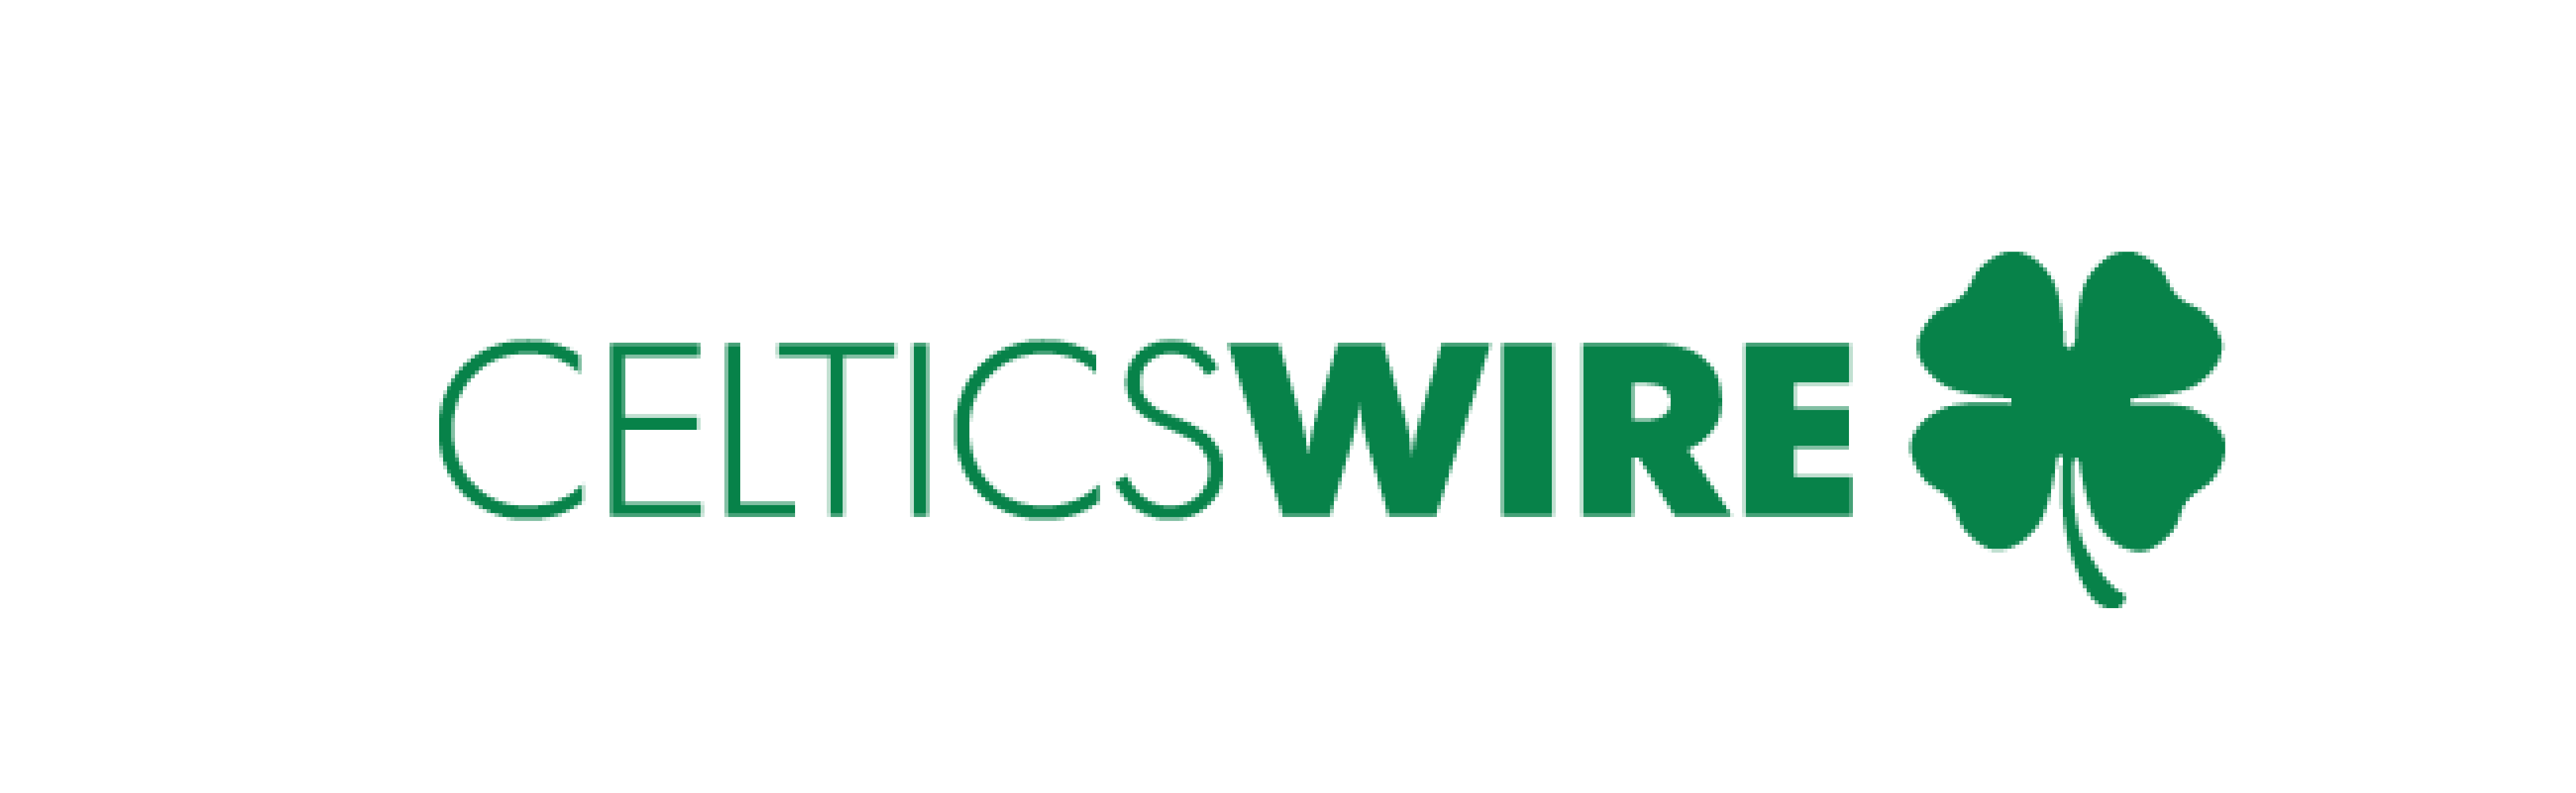 logo of Celtics wire